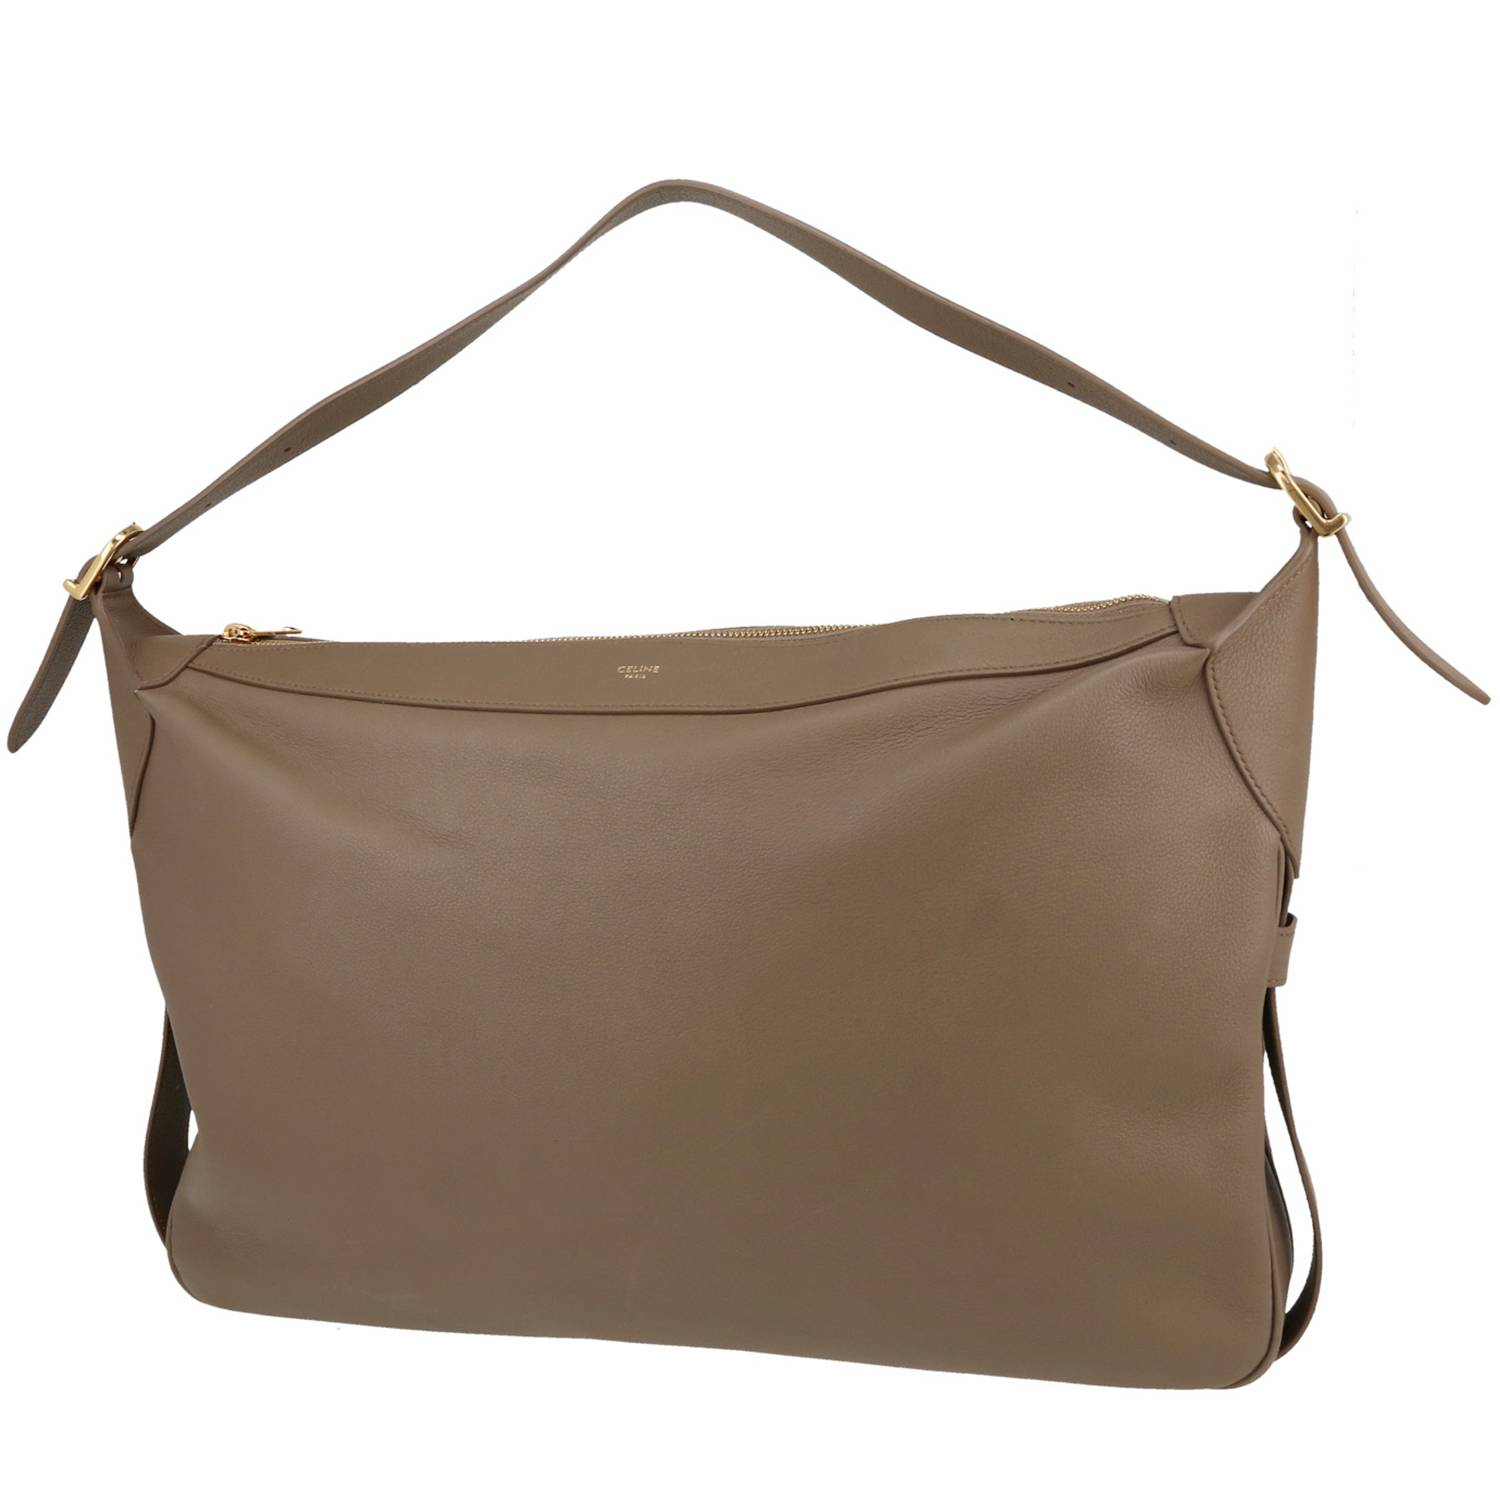 Romy Handbag In Taupe Leather